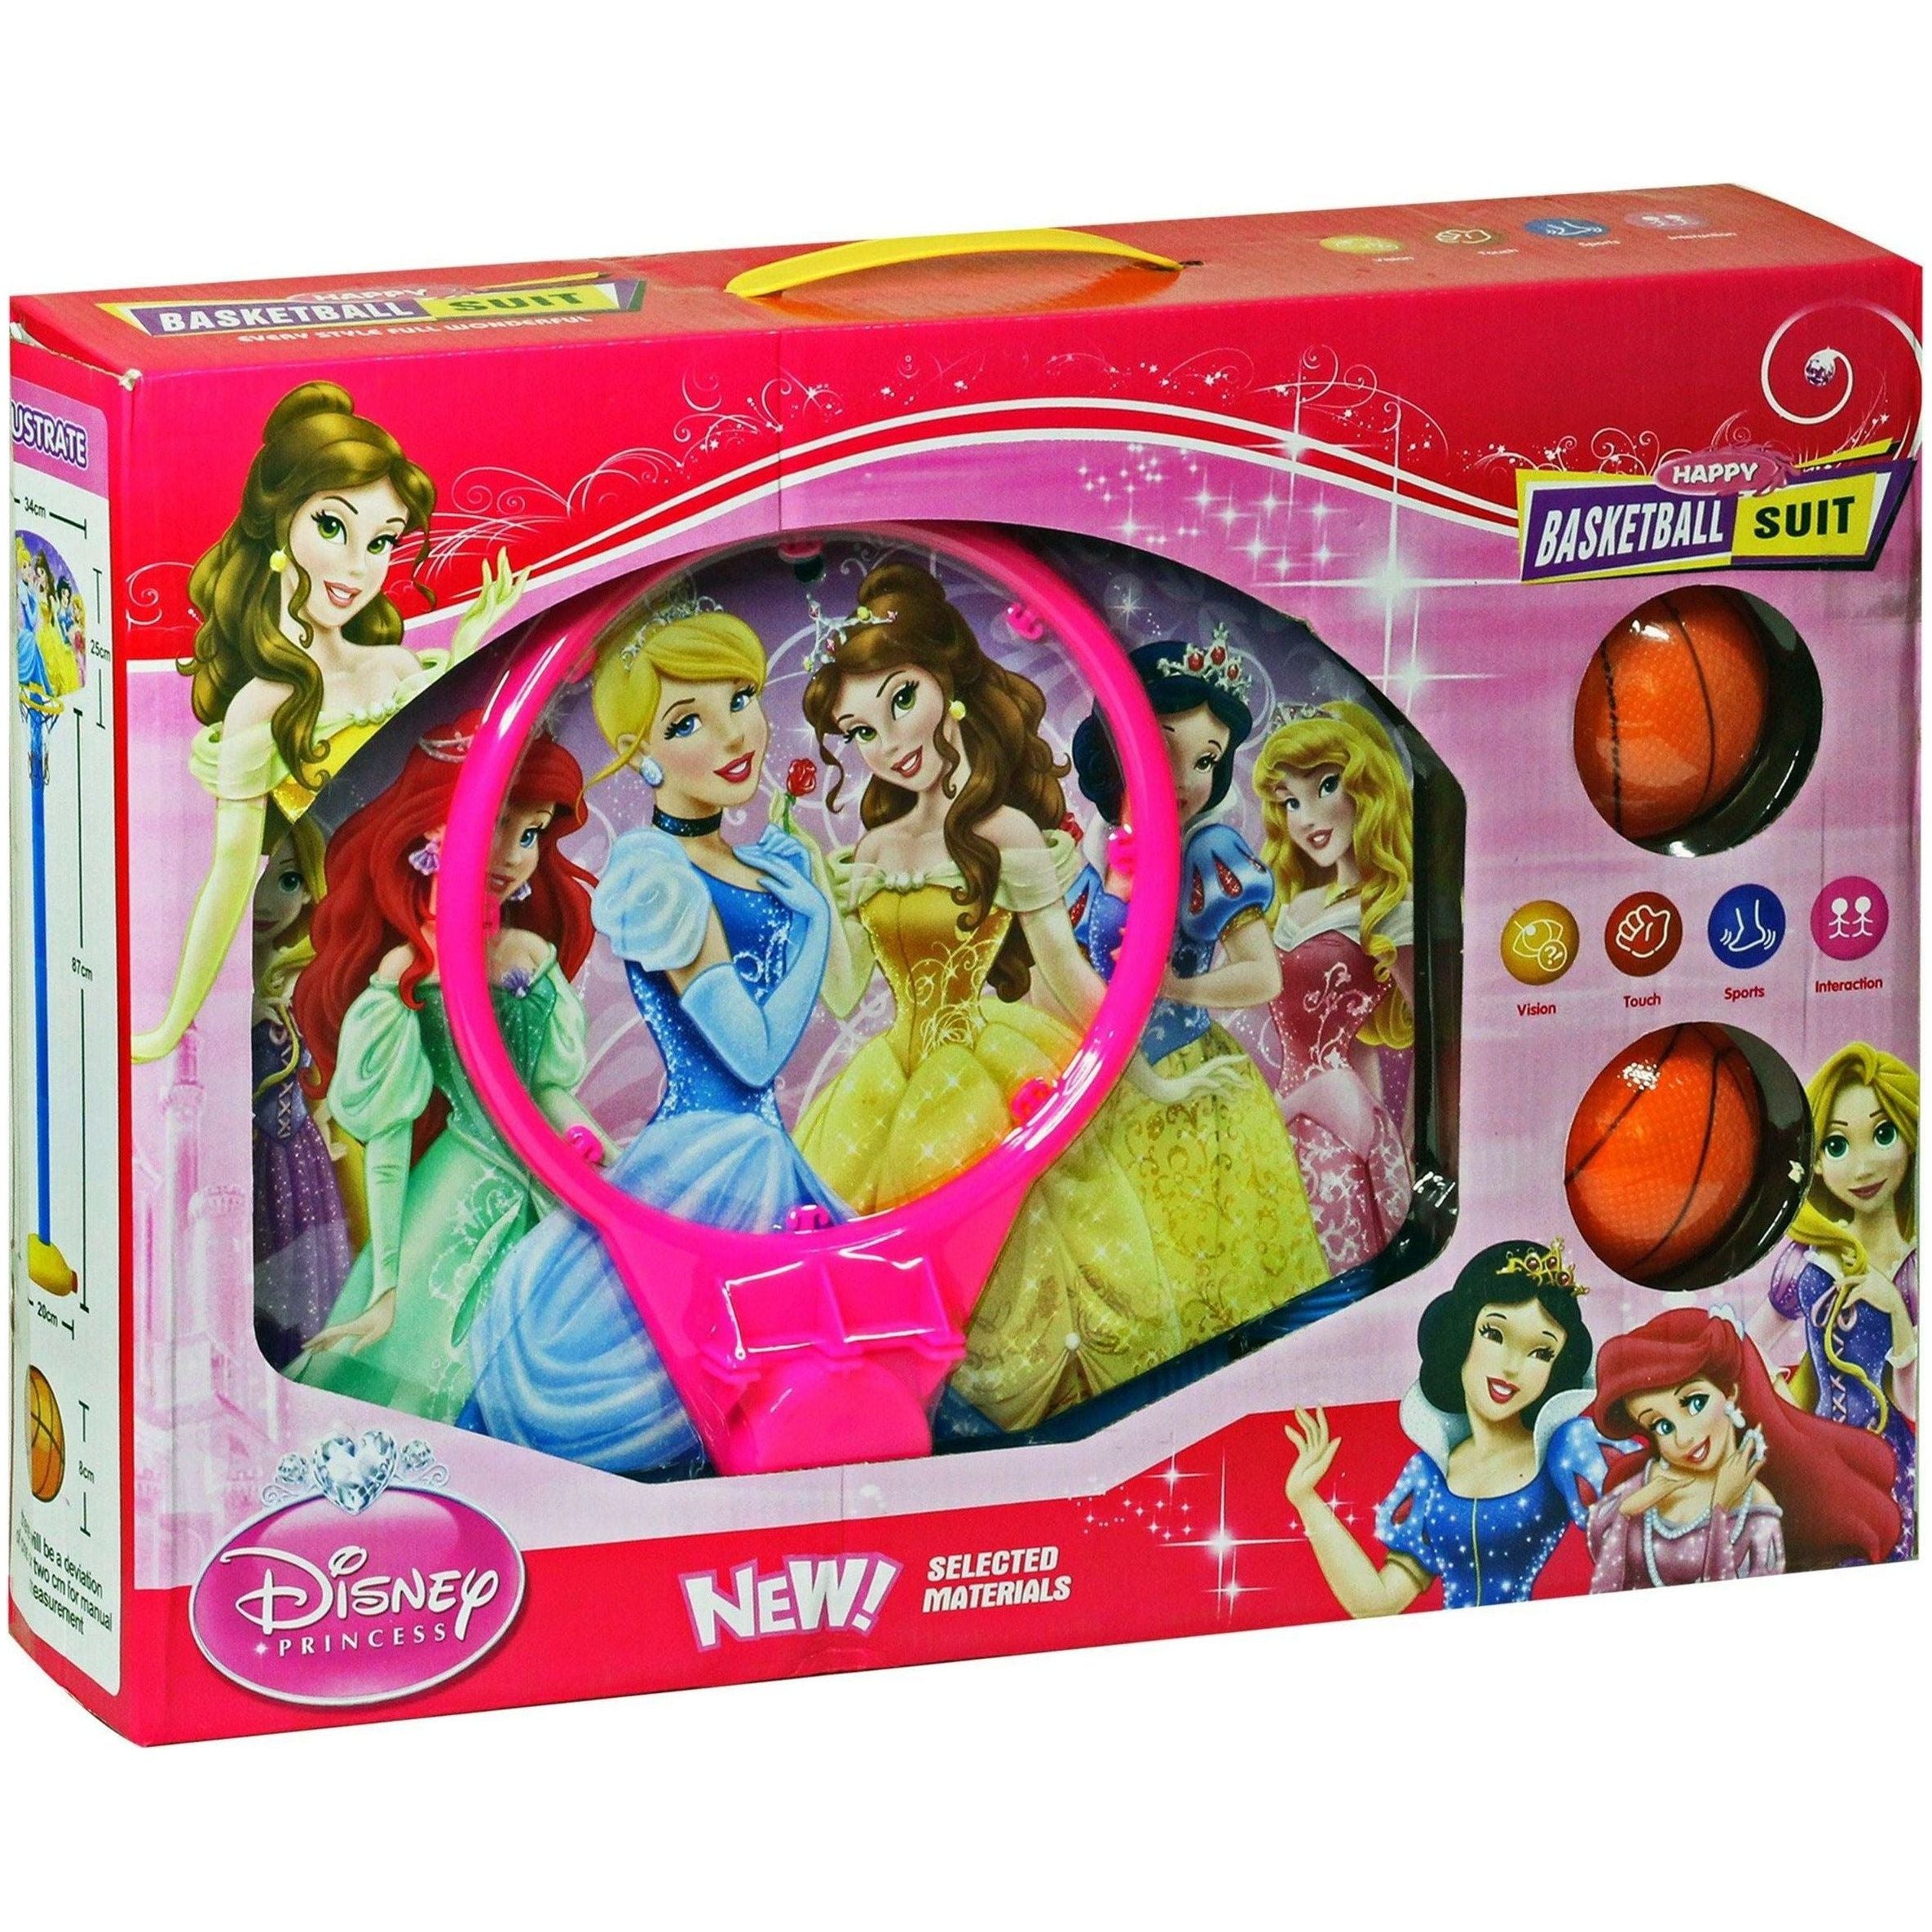 Disney Princess Basketball Suit Play Set For Kids - BumbleToys - 5-7 Years, Funday, Girls, Kids Sports & Balls